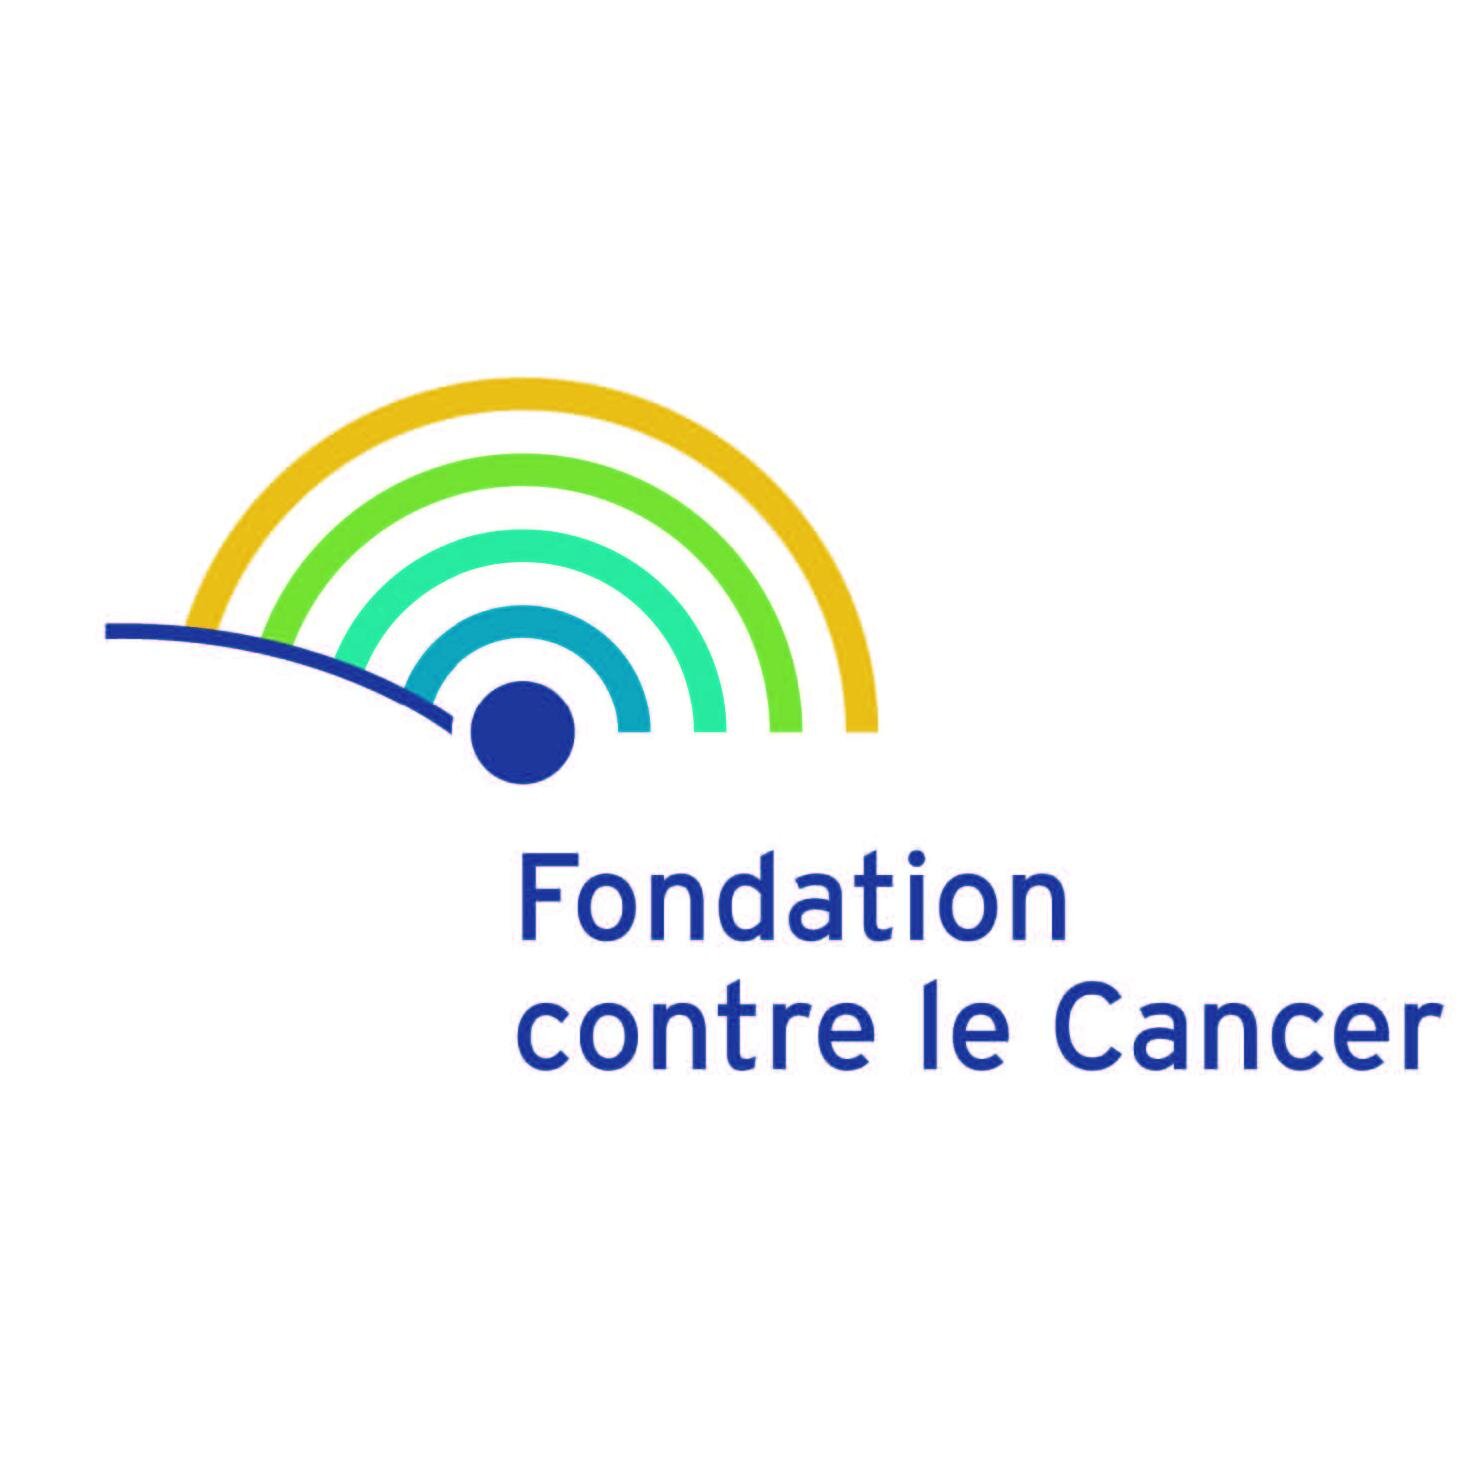 Fondation c/l Cancer